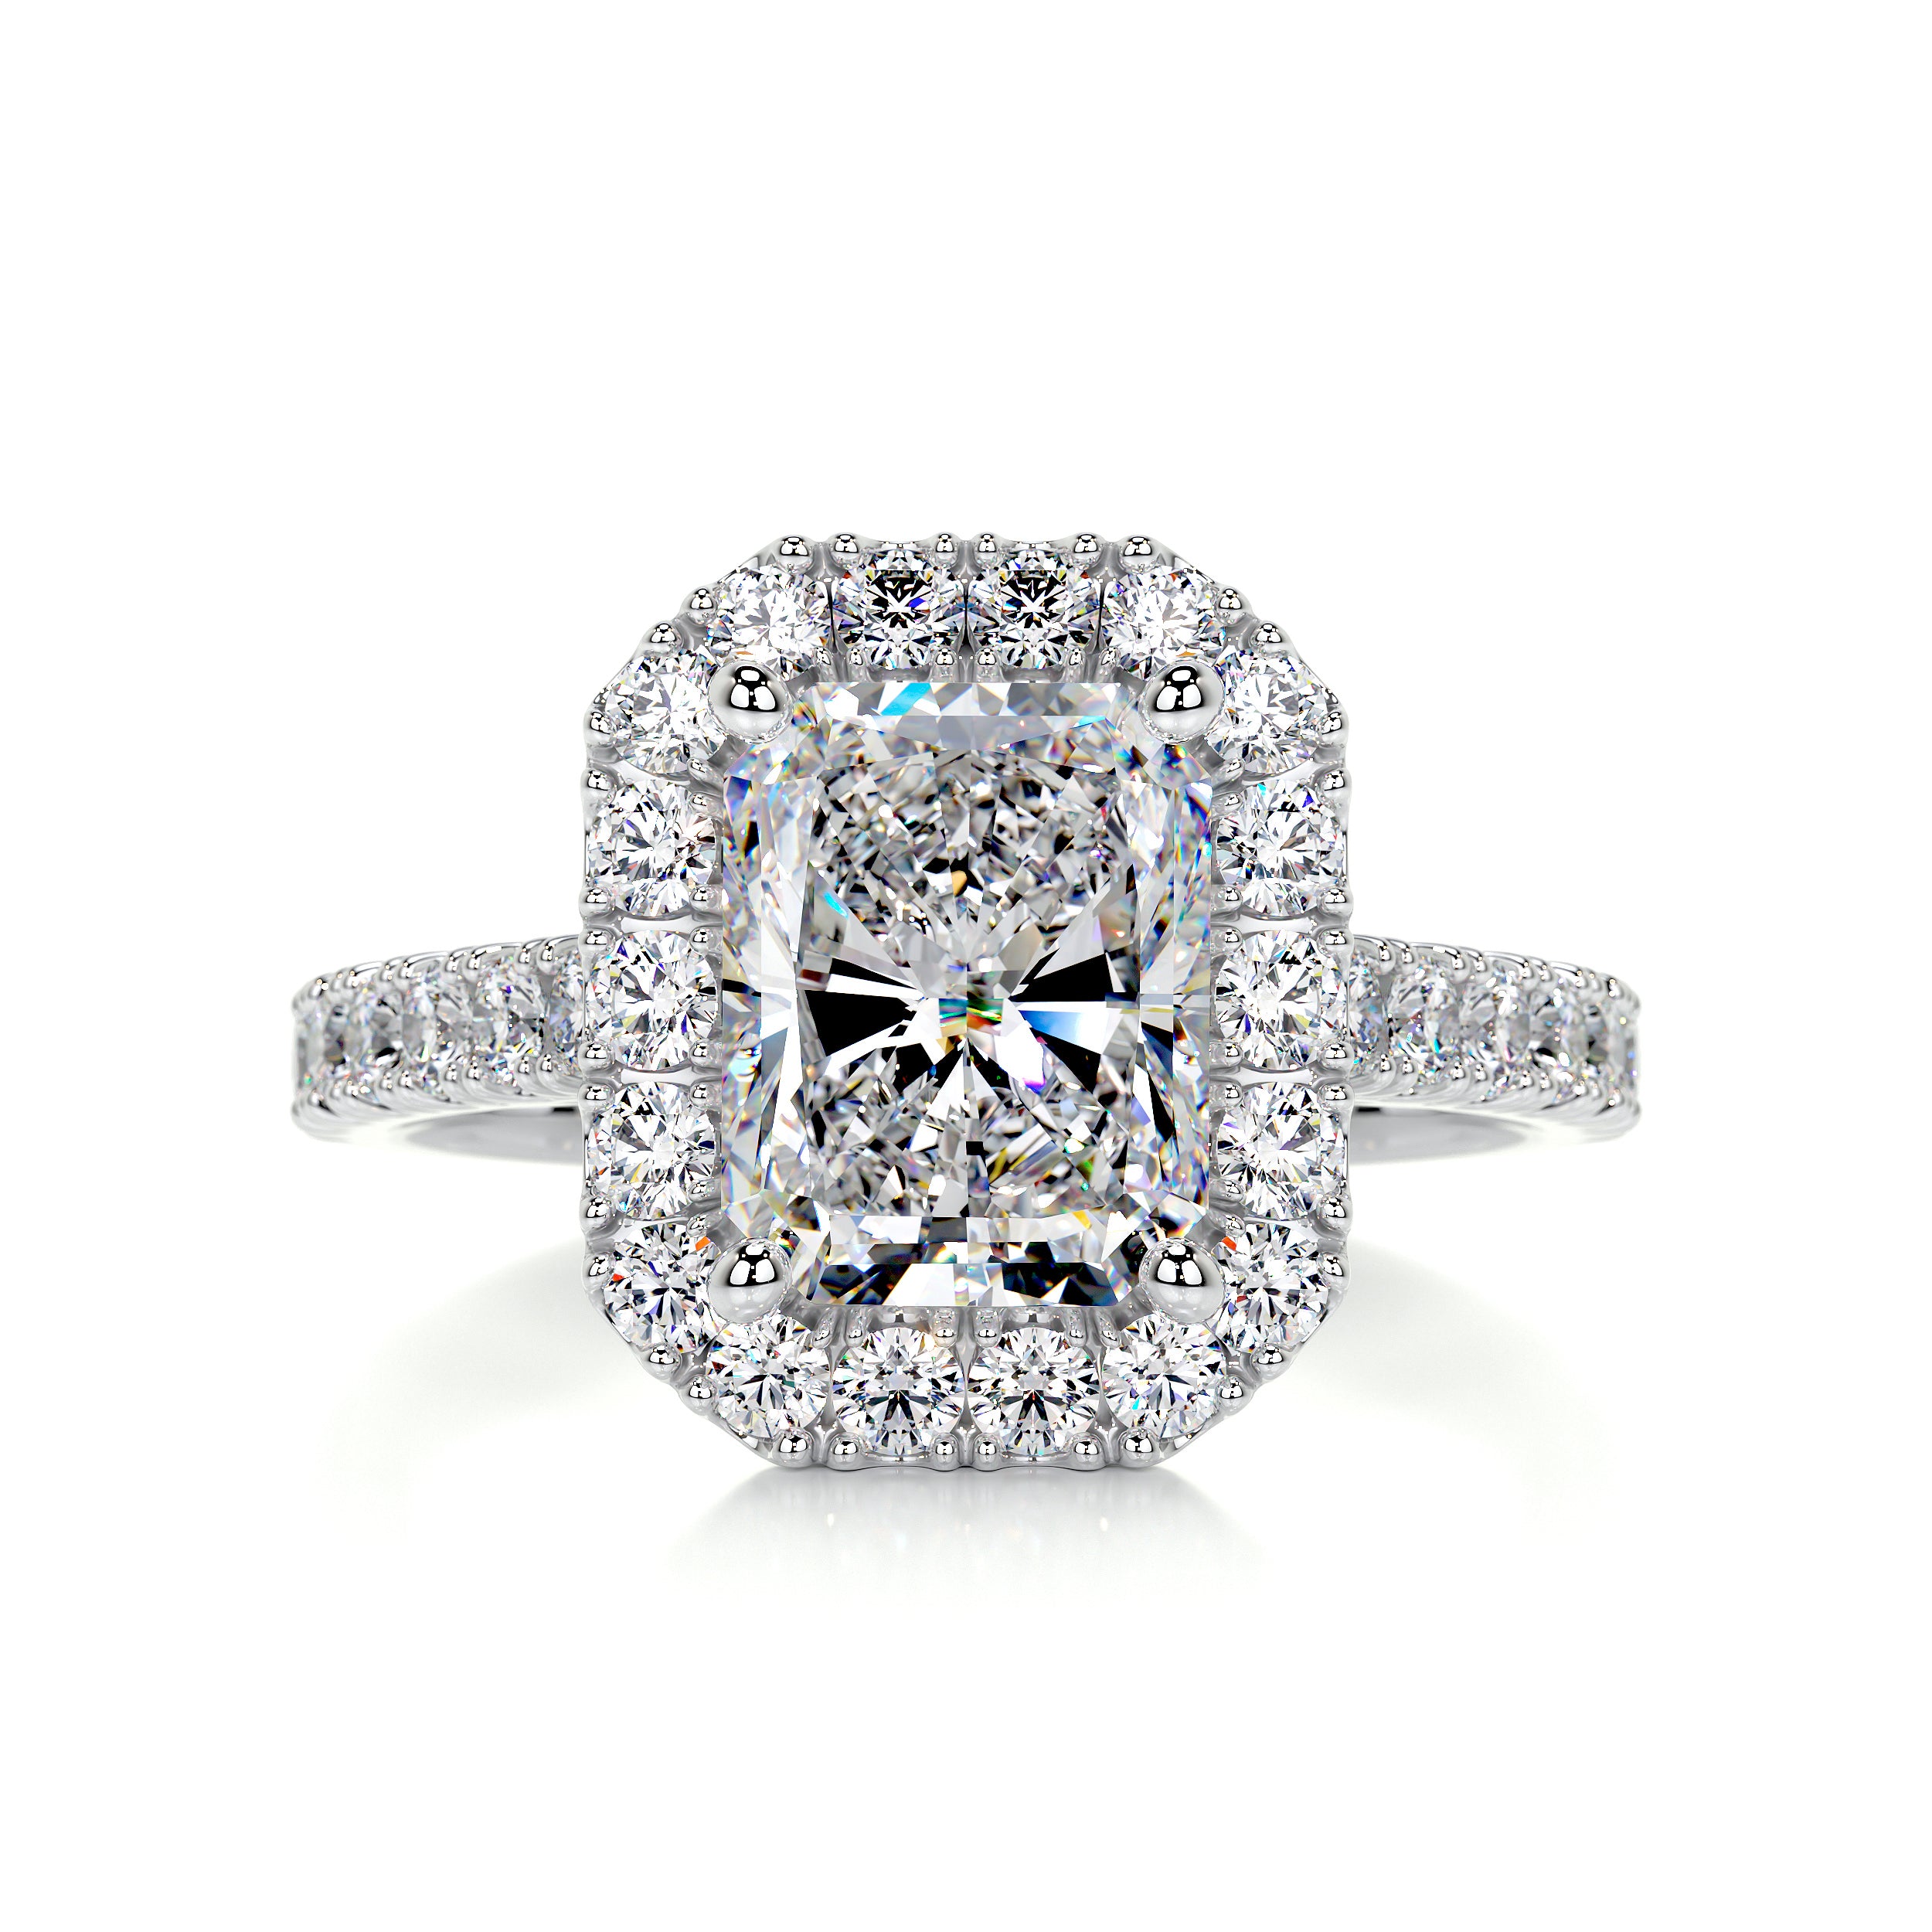 Andrea Moissanite & Diamonds Ring -14K White Gold, Halo, 2.3 Carat